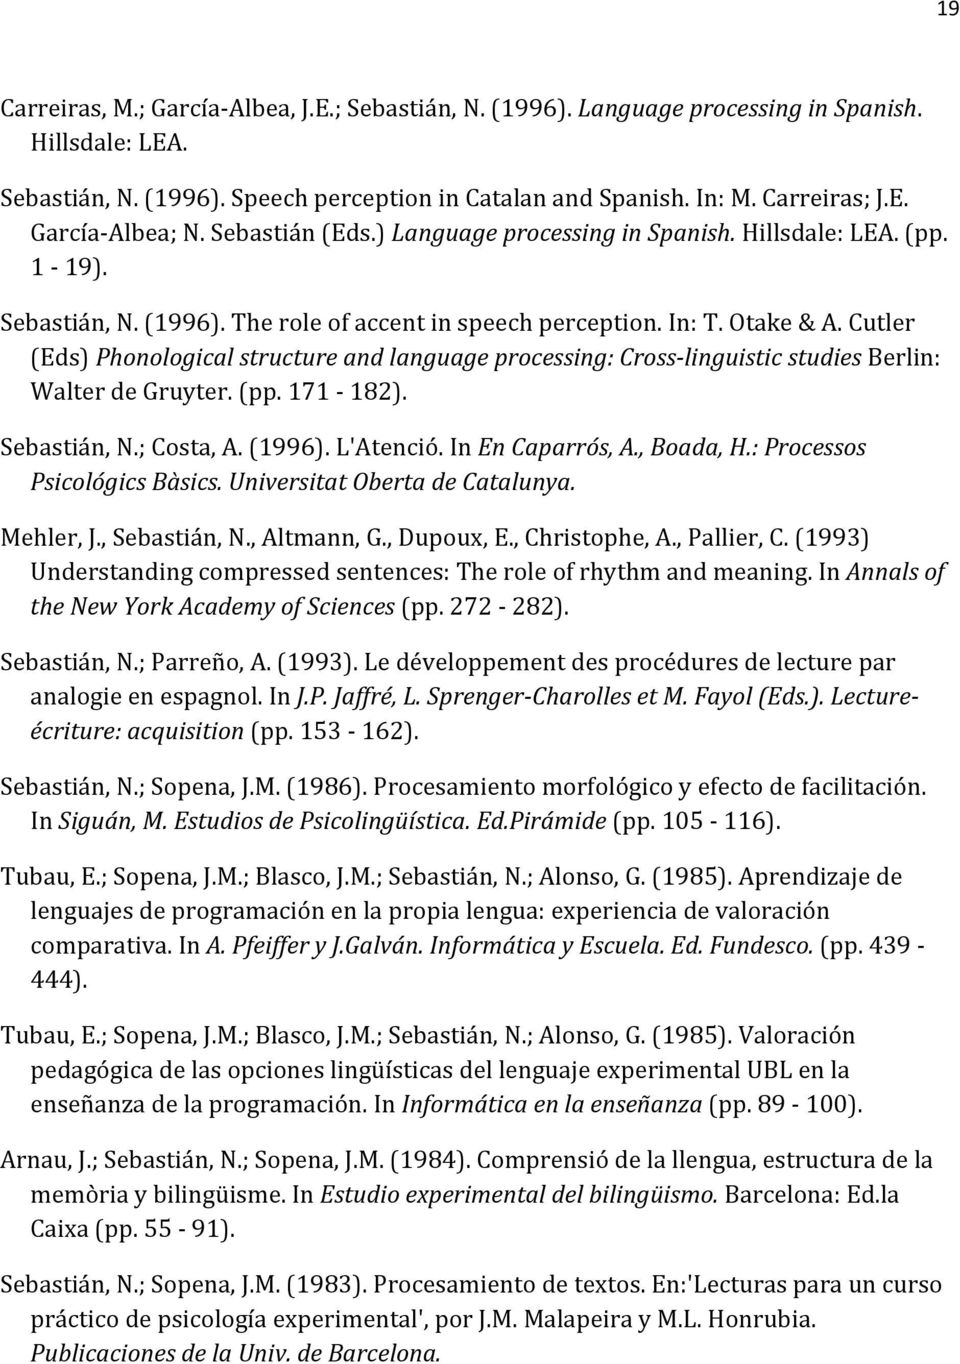 Cutler (Eds)Phonologicalstructureandlanguageprocessing:Cross[linguisticstudiesBerlin: WalterdeGruyter.(pp.171S182). Sebastián,N.;Costa,A.(1996).L'Atenció.InEnCaparrós,A.,Boada,H.